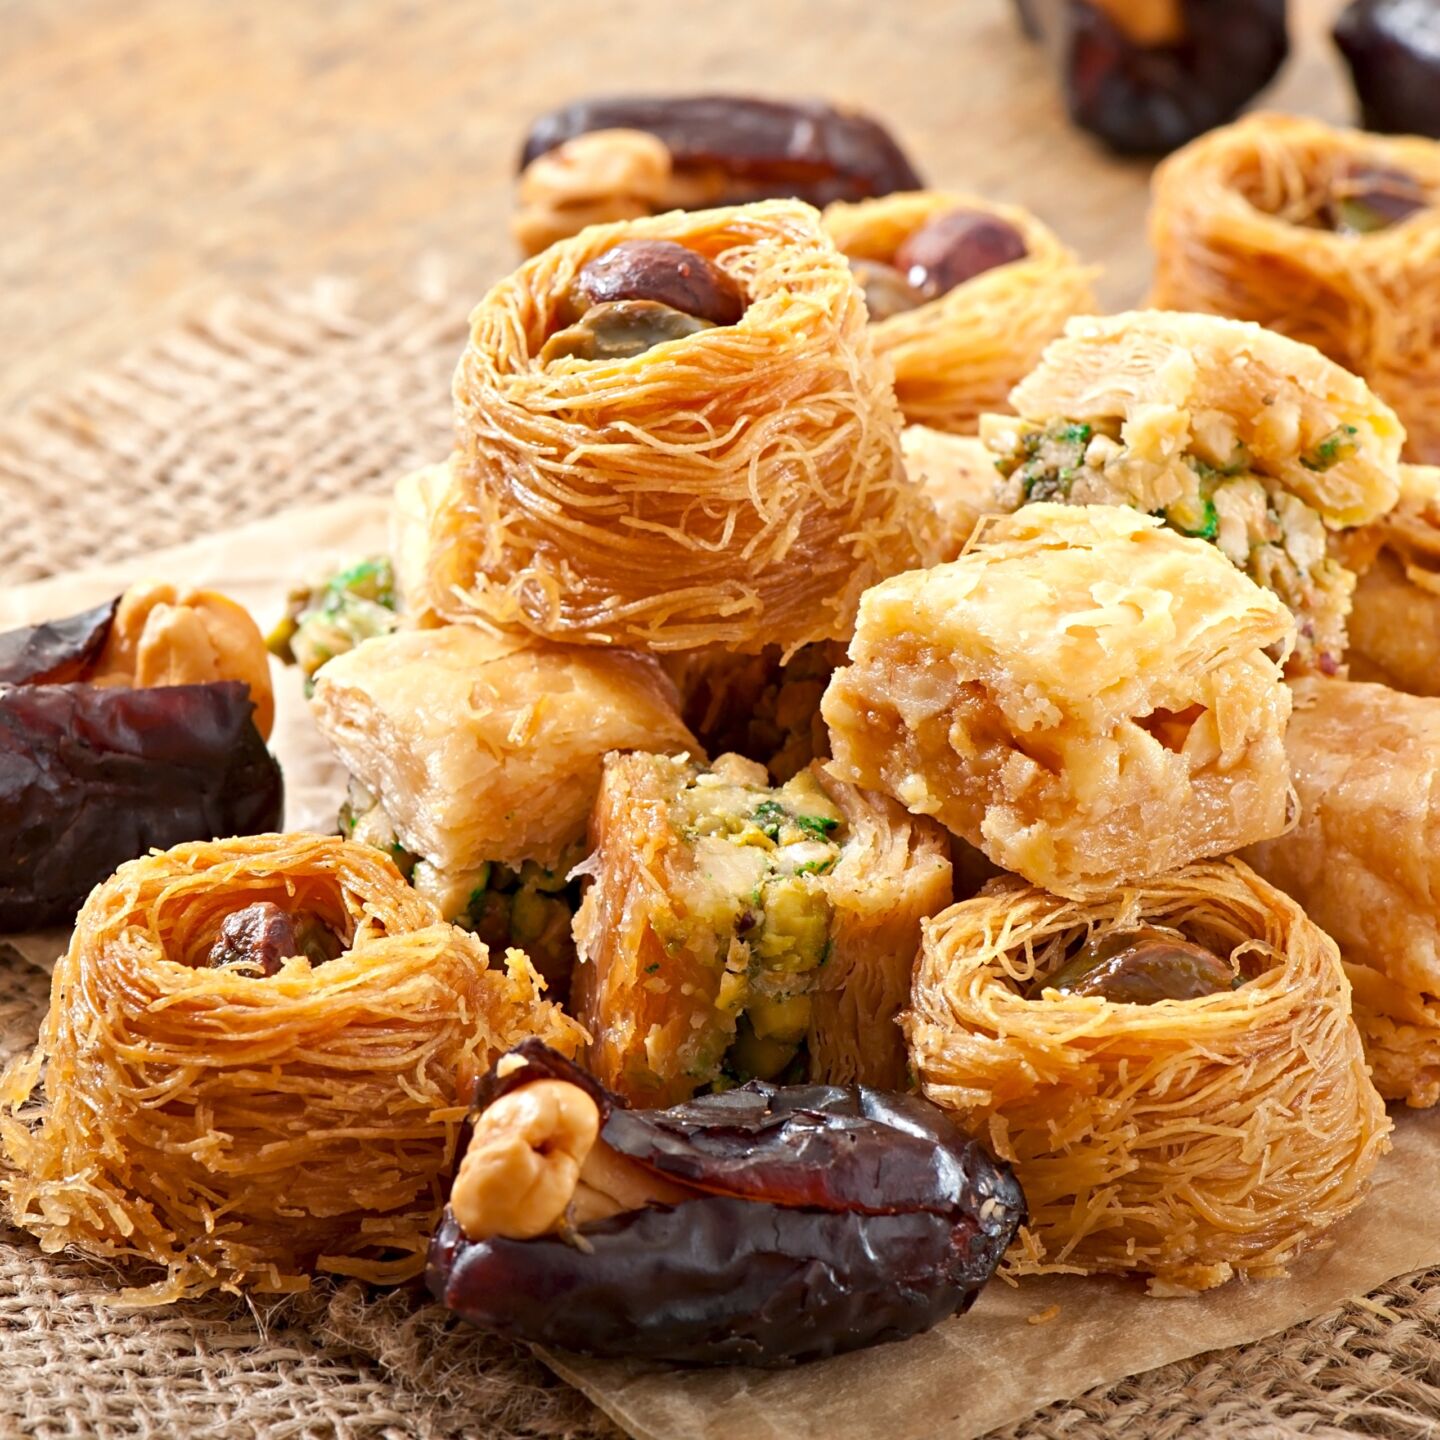 I. Introduction to Mediterranean-Inspired Desserts